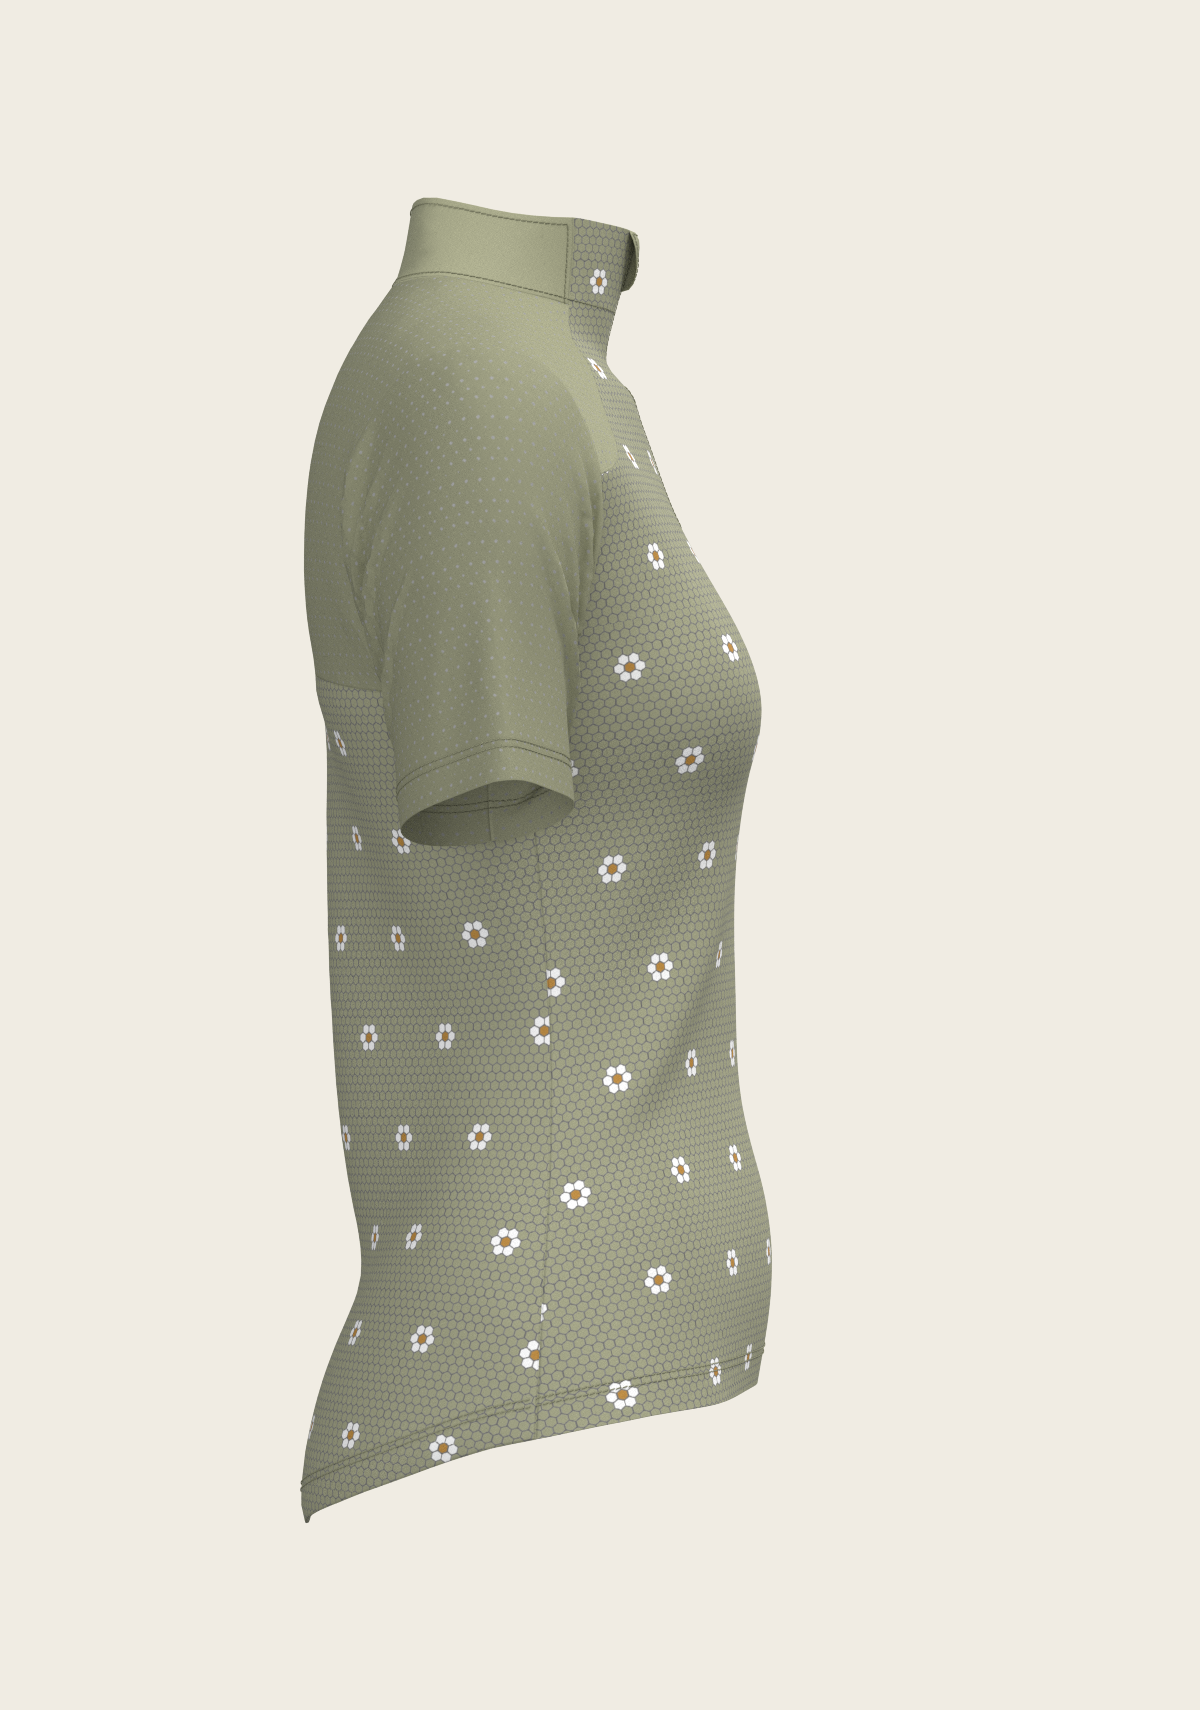 Mosaic Daises in Olive Short Sleeve Sport Sun Shirt